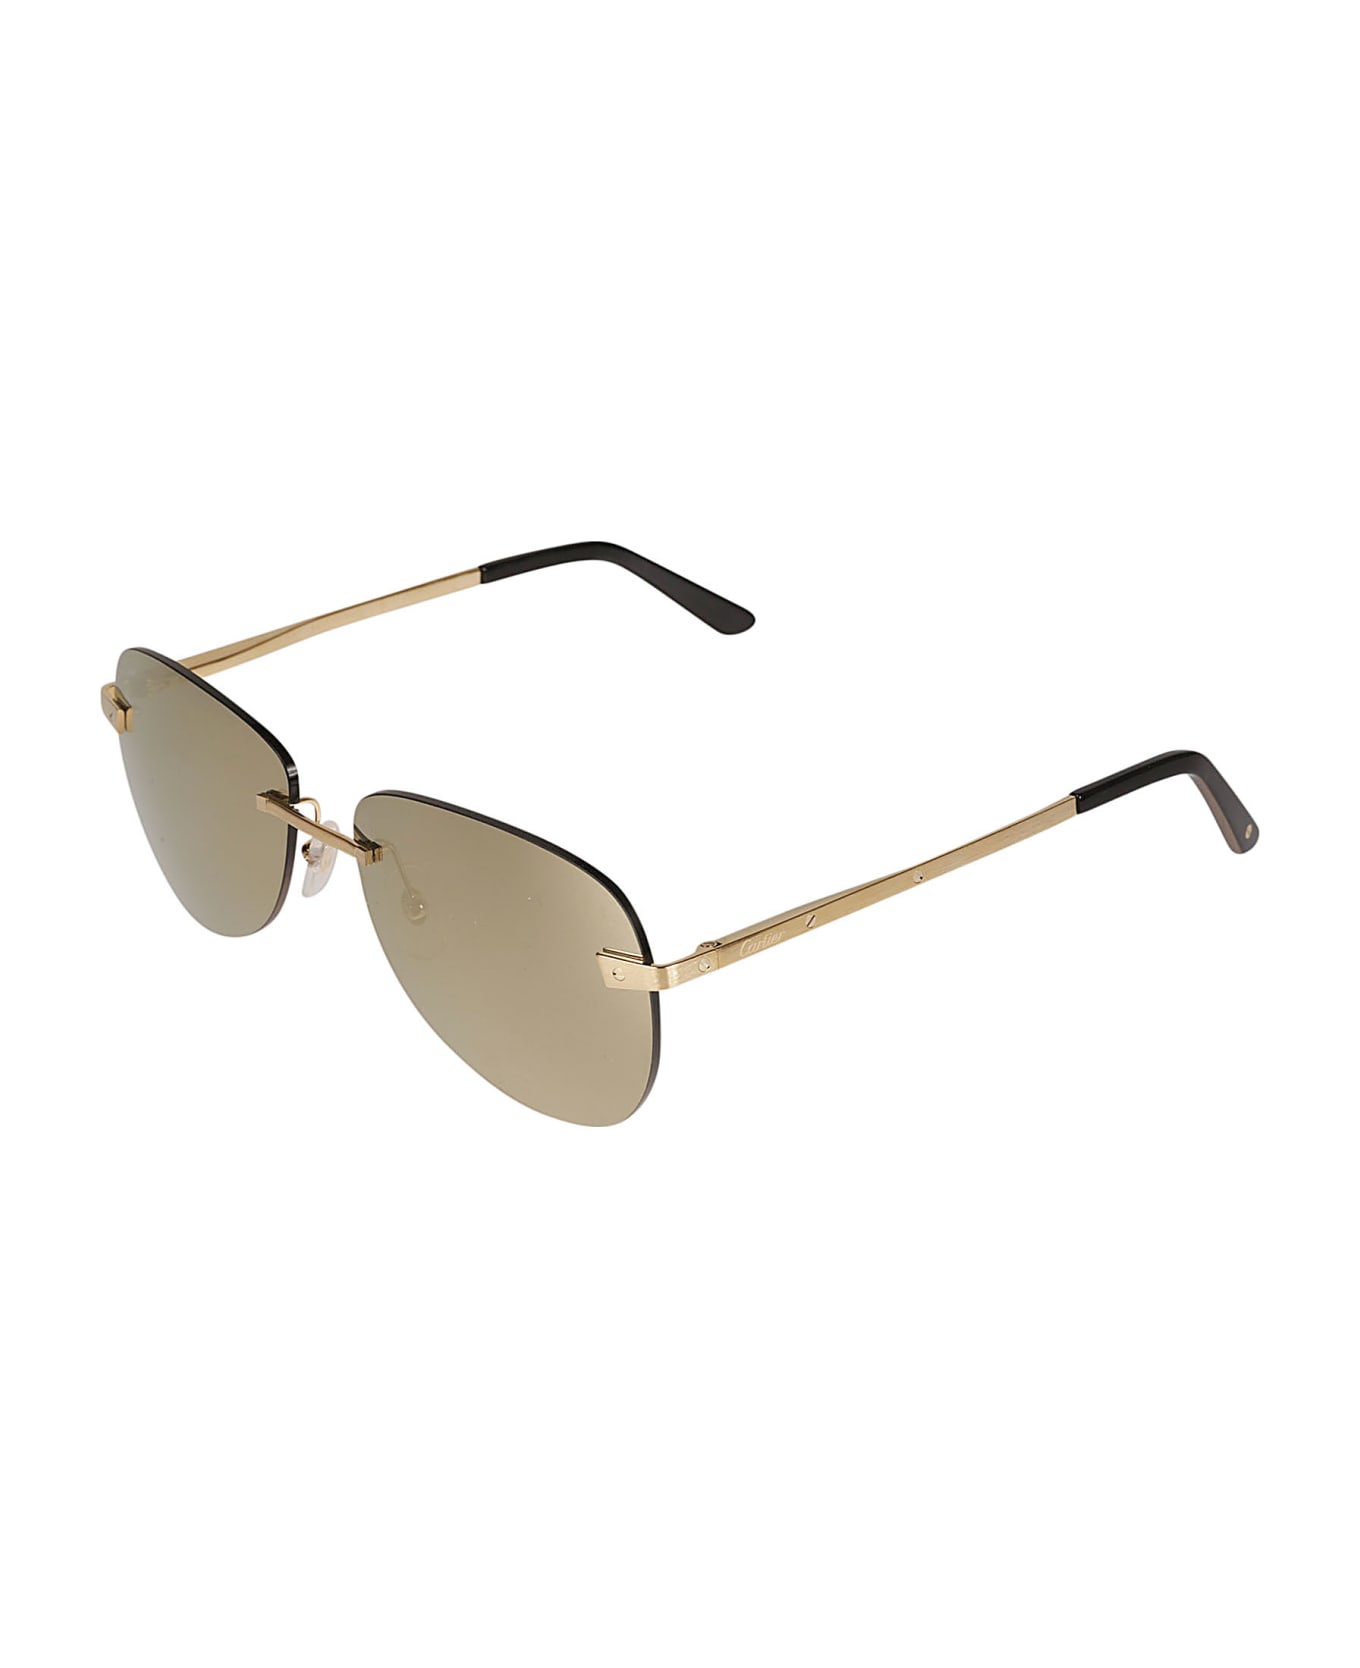 Cartier Eyewear Rimless Sunglasses - 001